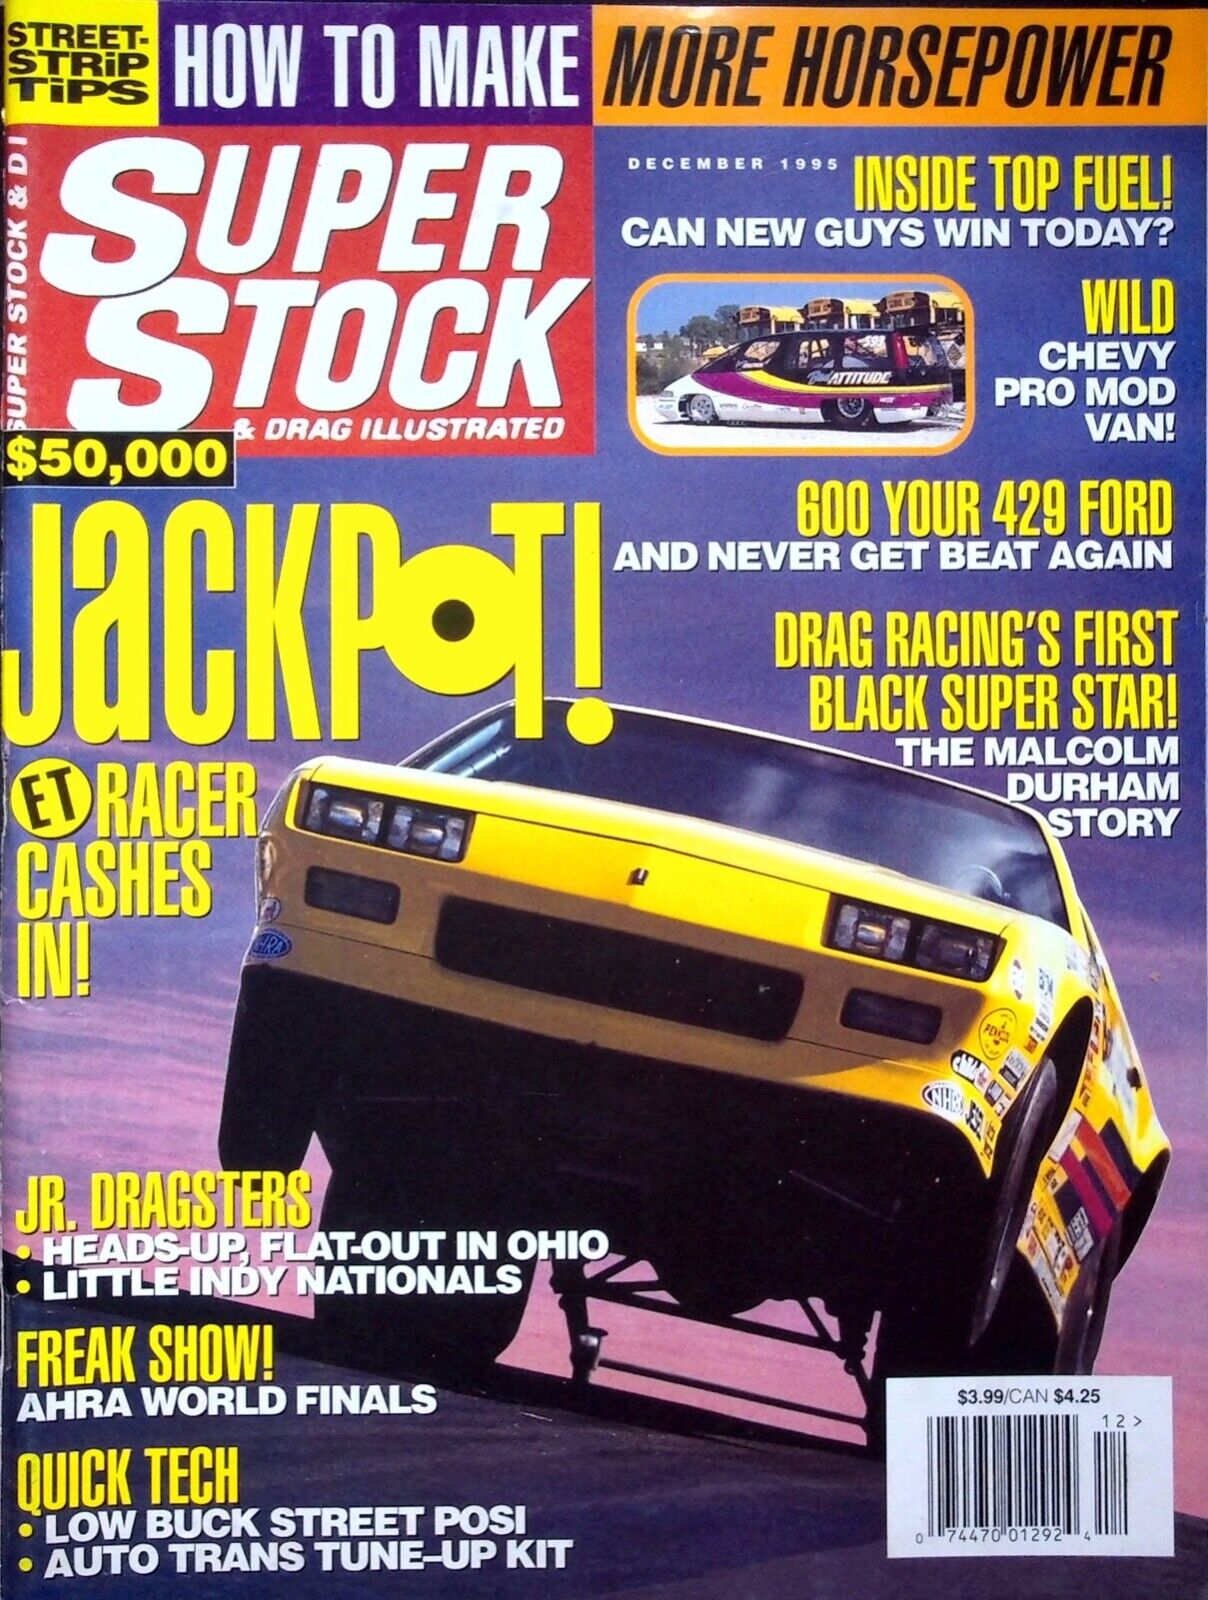 SUPER STOCK & DRAG ILLUSTRATED MAGAZINE, DECEMBER 1995 VOLUME 22 NUMBER 12